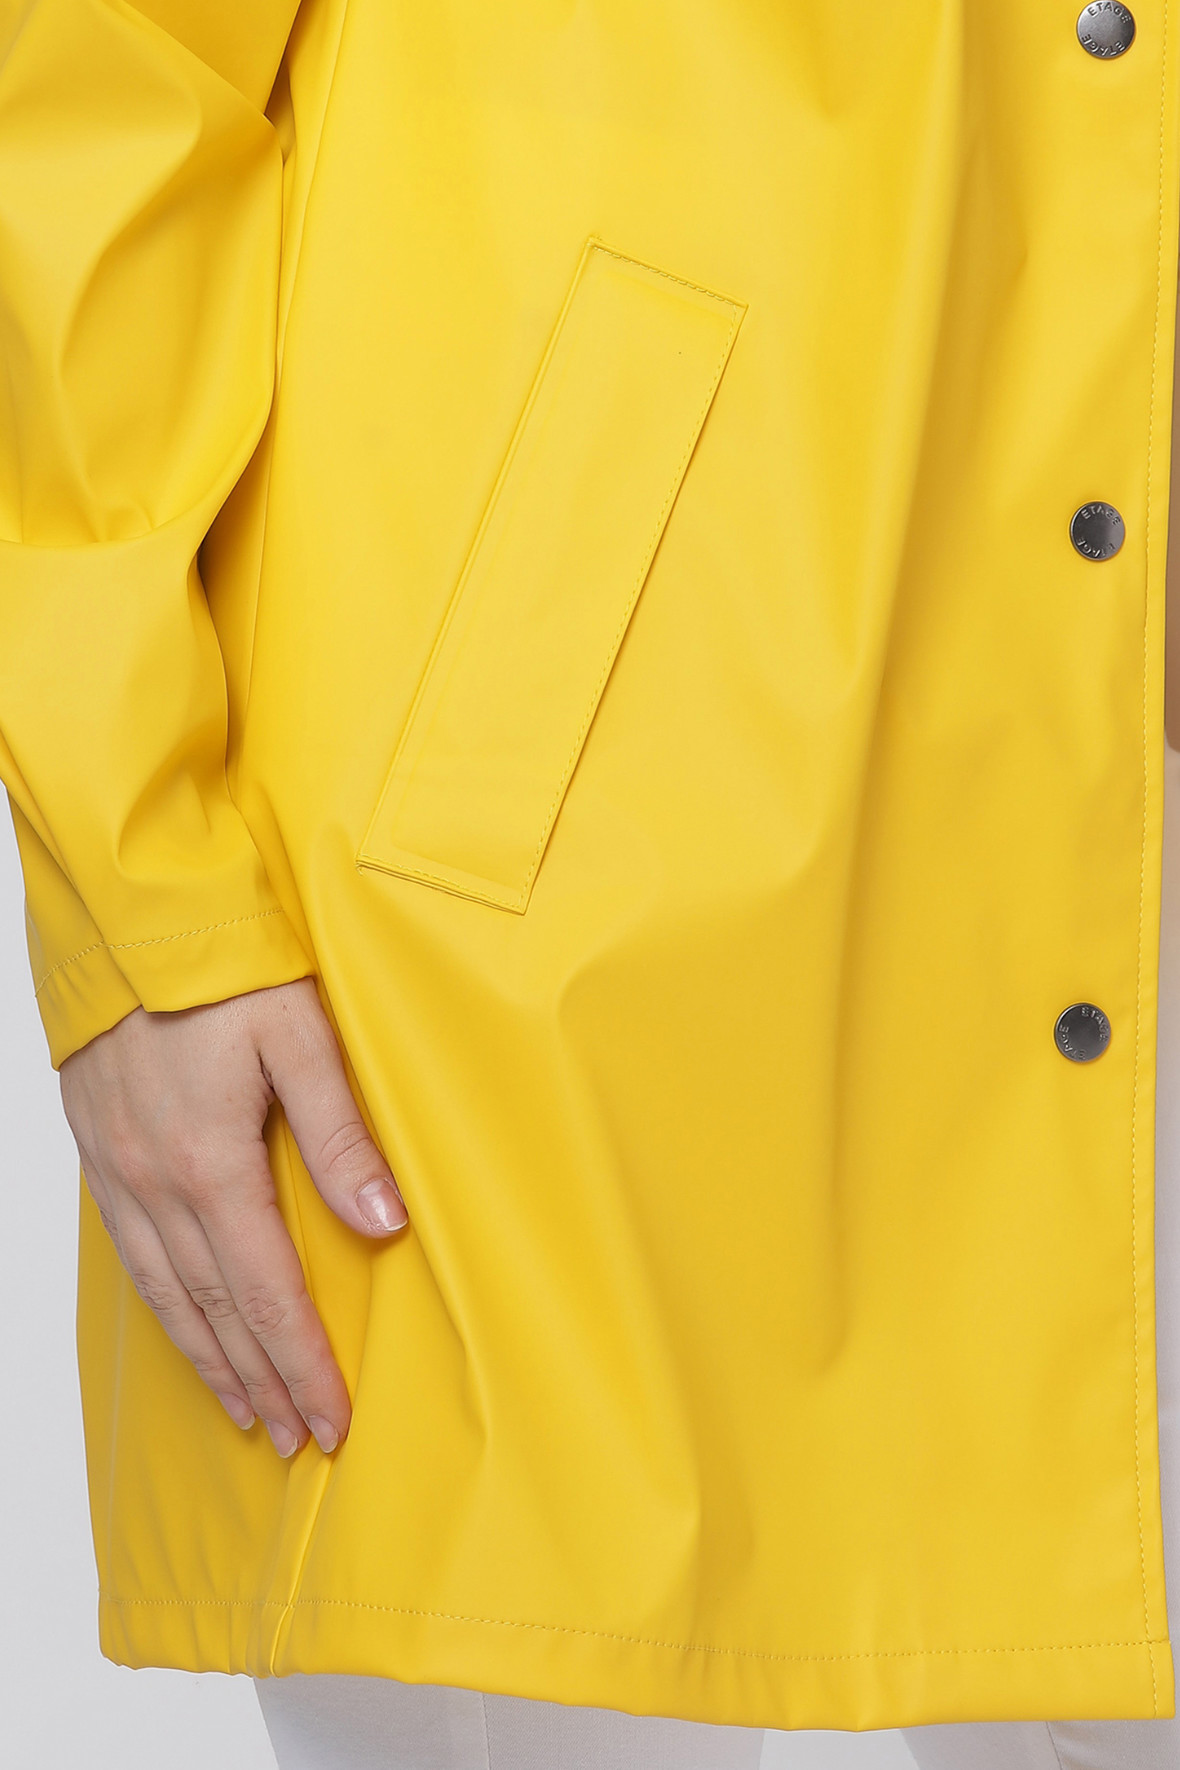 Hyret kilometer procedure Etage regnfrakke regnjakke og regntøj i ensfarvet gul til damer - Hos Lohse